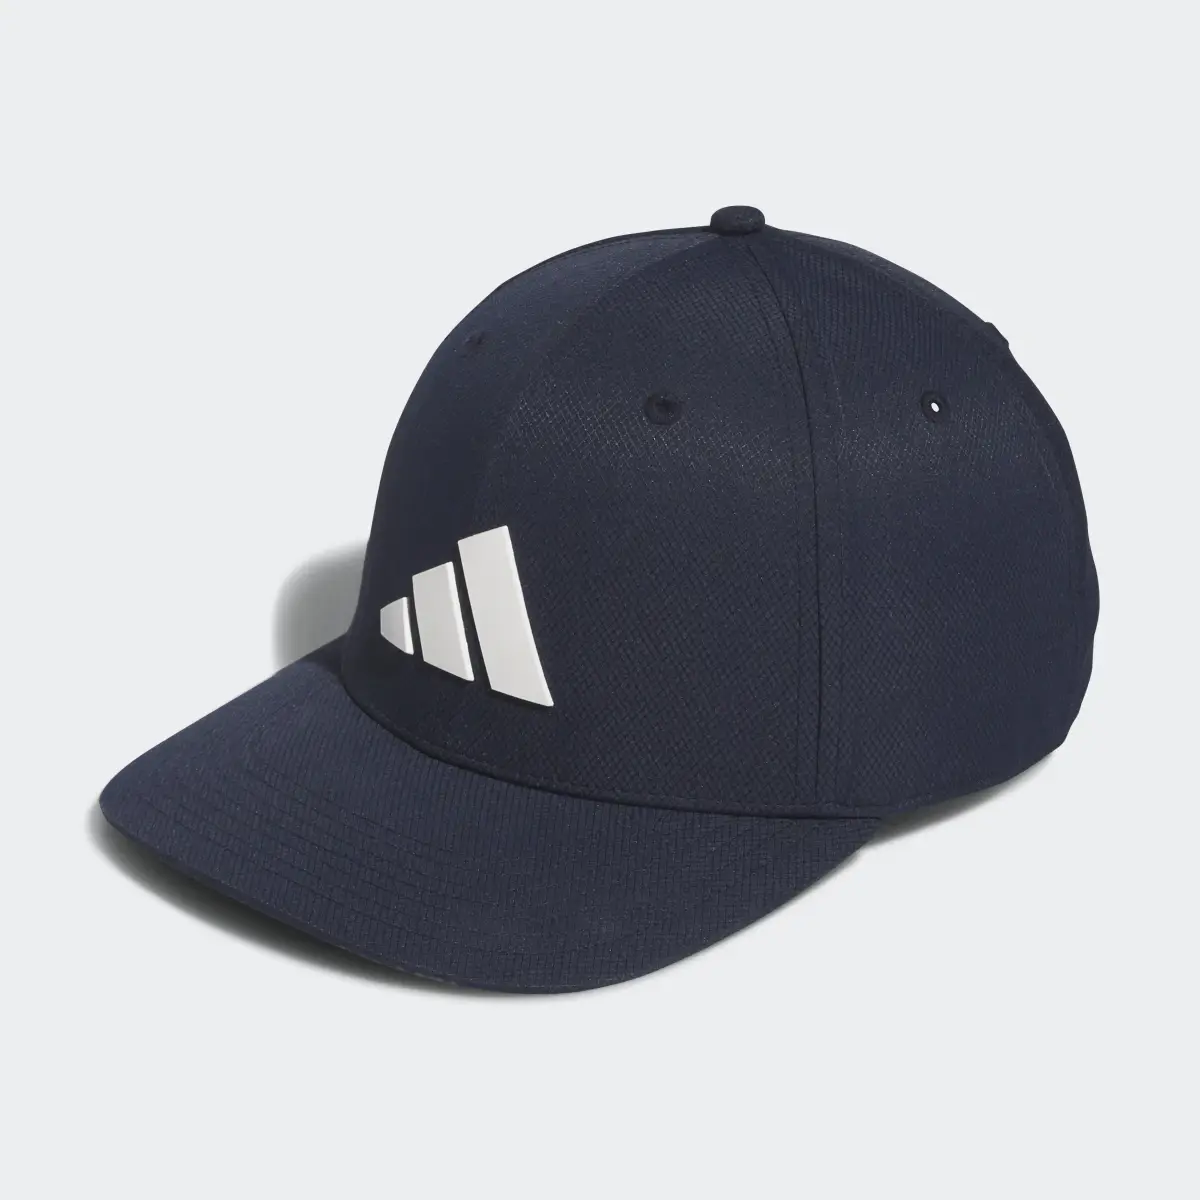 Adidas Tour Snapback Golf Hat. 2